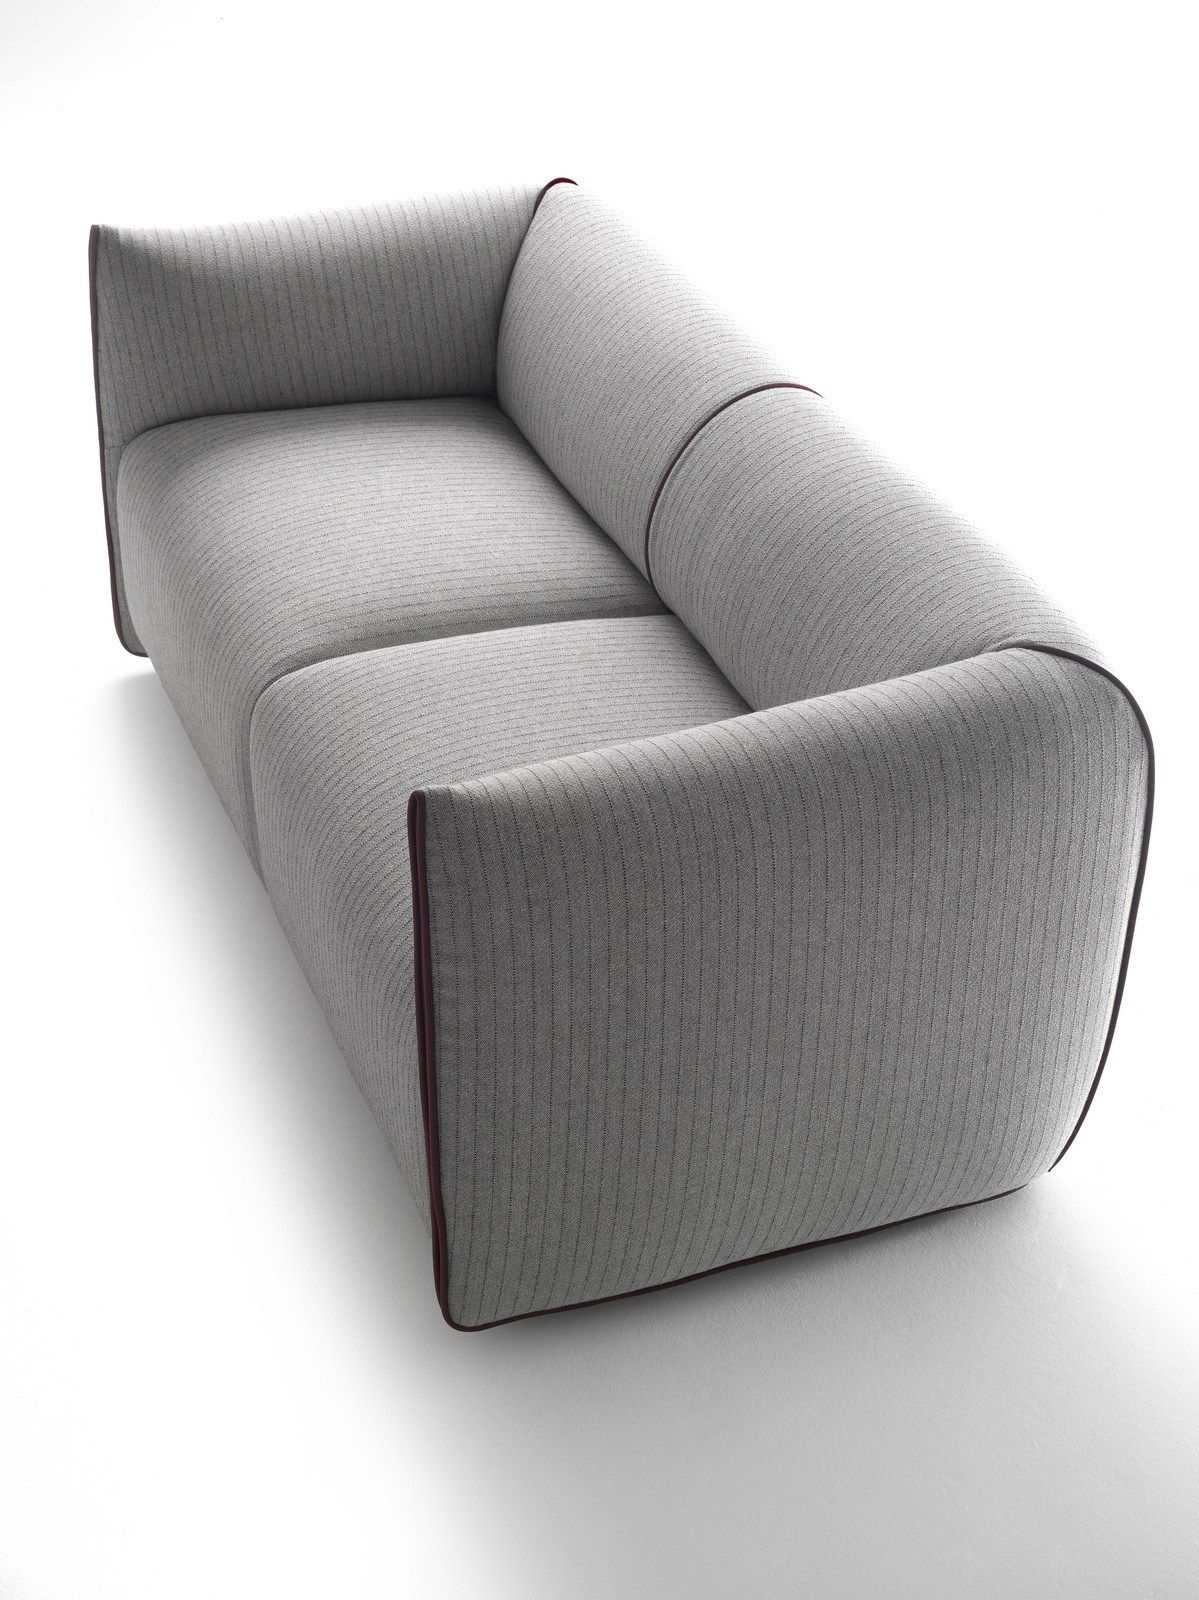 MIA | Sofa By MDF Italia design Francesco Bettoni